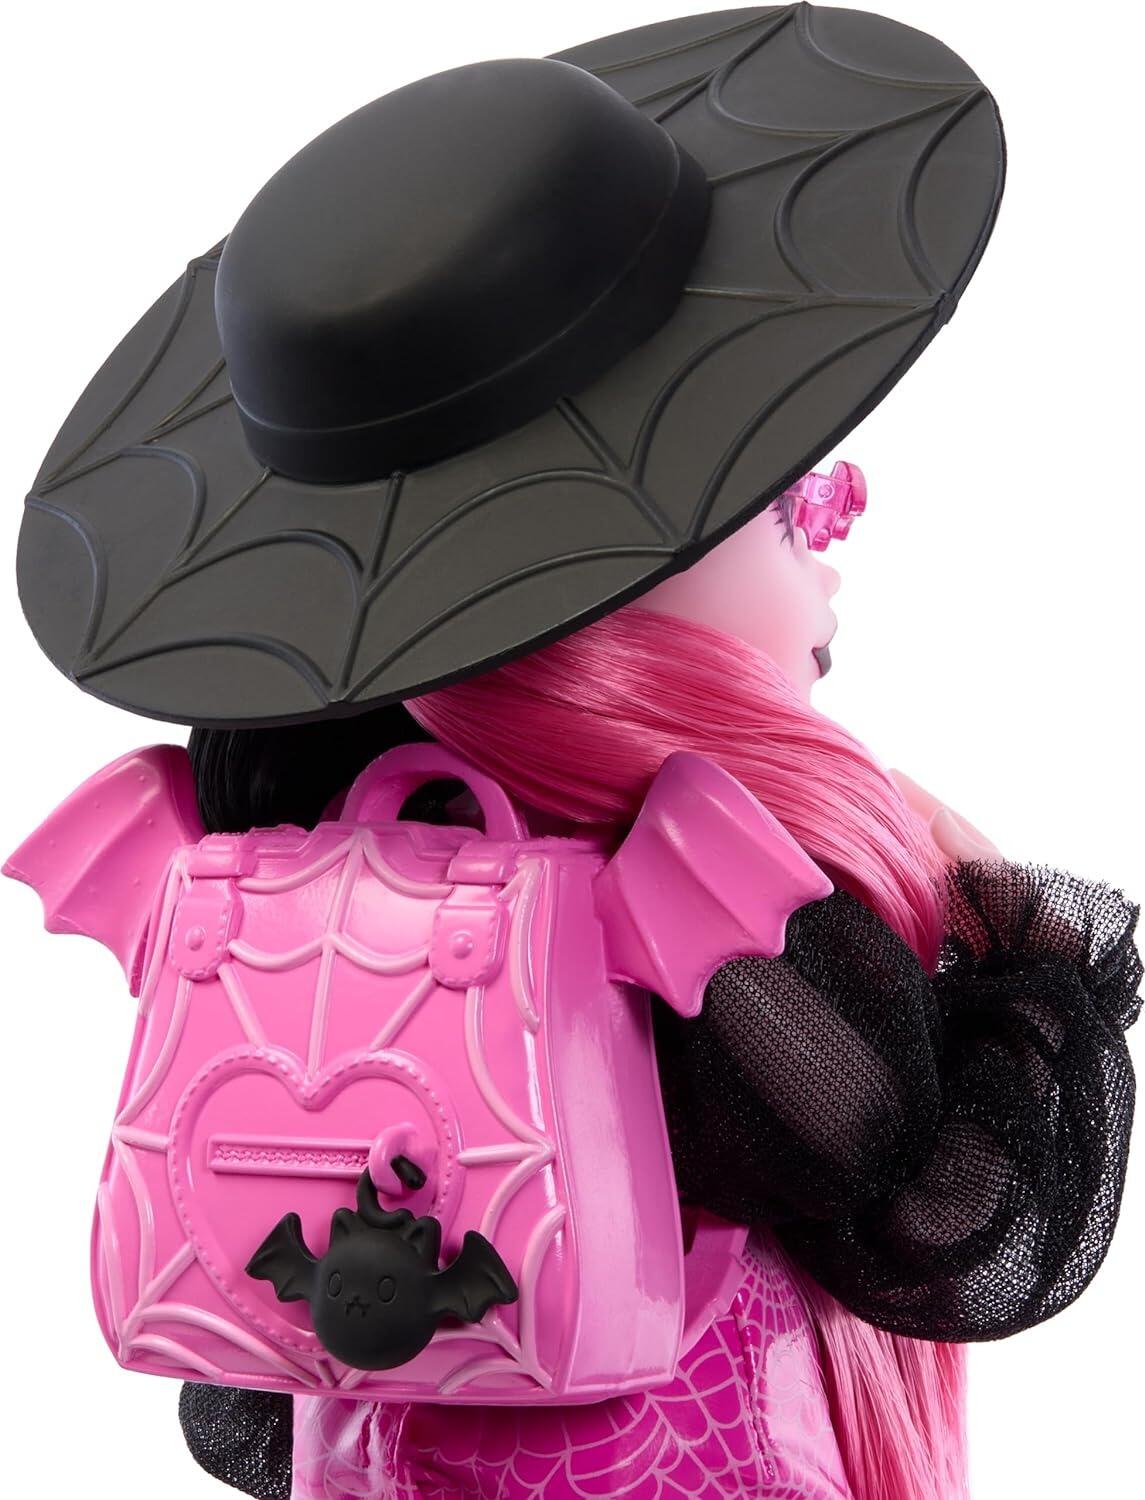 Buy Monster High Draculaura Doll With Pet Bat Cat Count Fabulous Monster High Dolls UK Bentzens